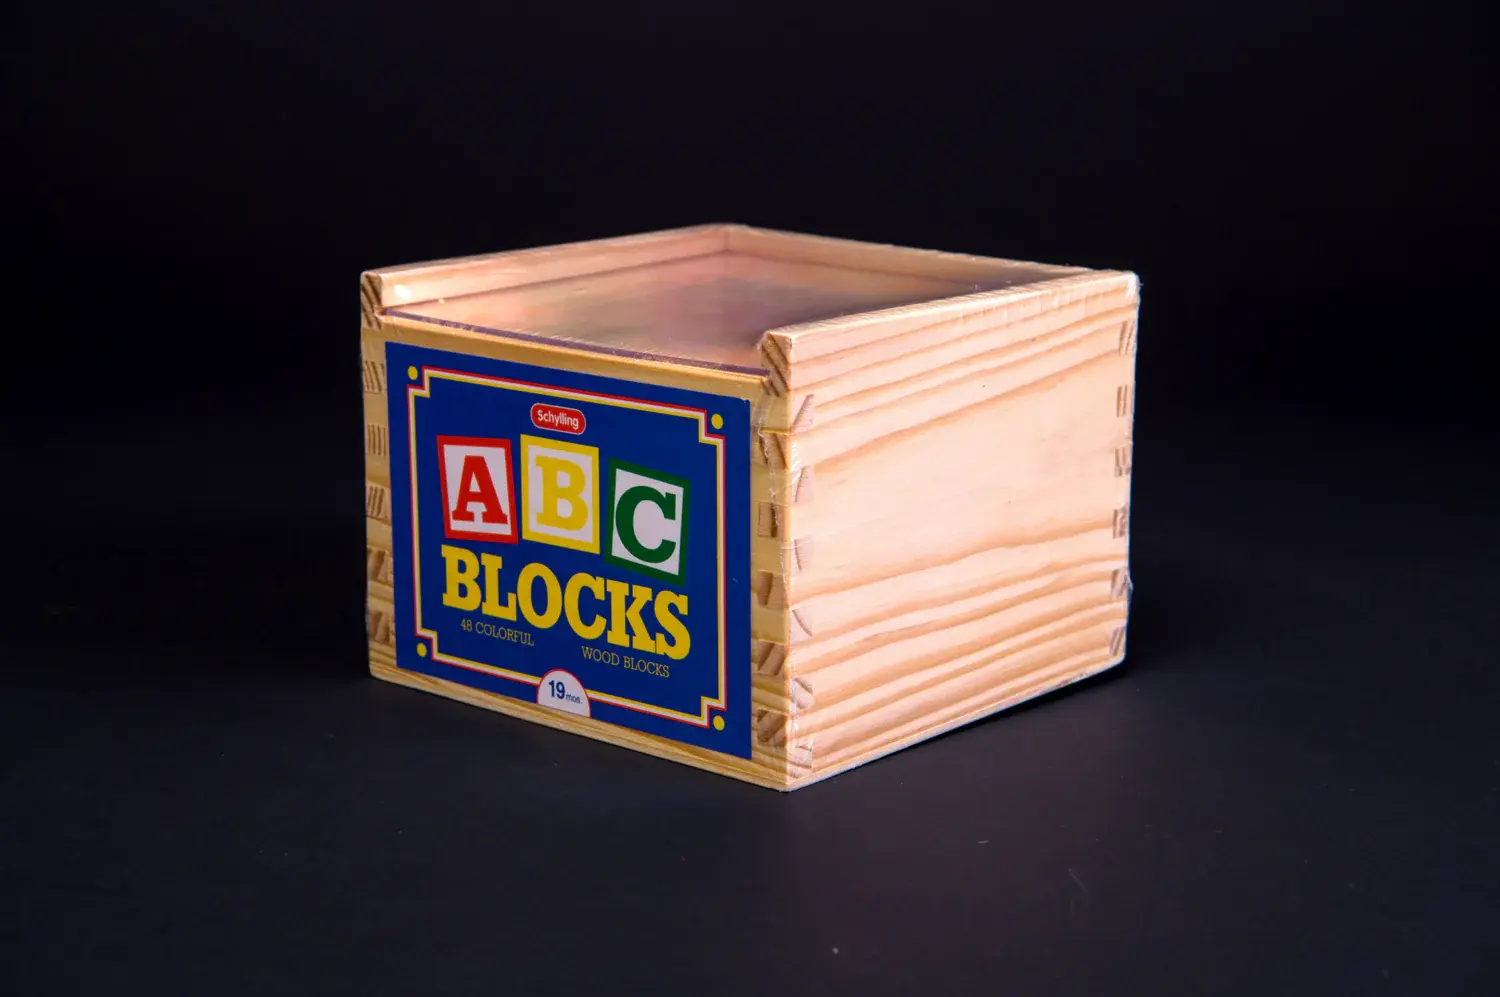 Infant & Preschool Alphabet Blocks 48 Pcs., Small 1.25"